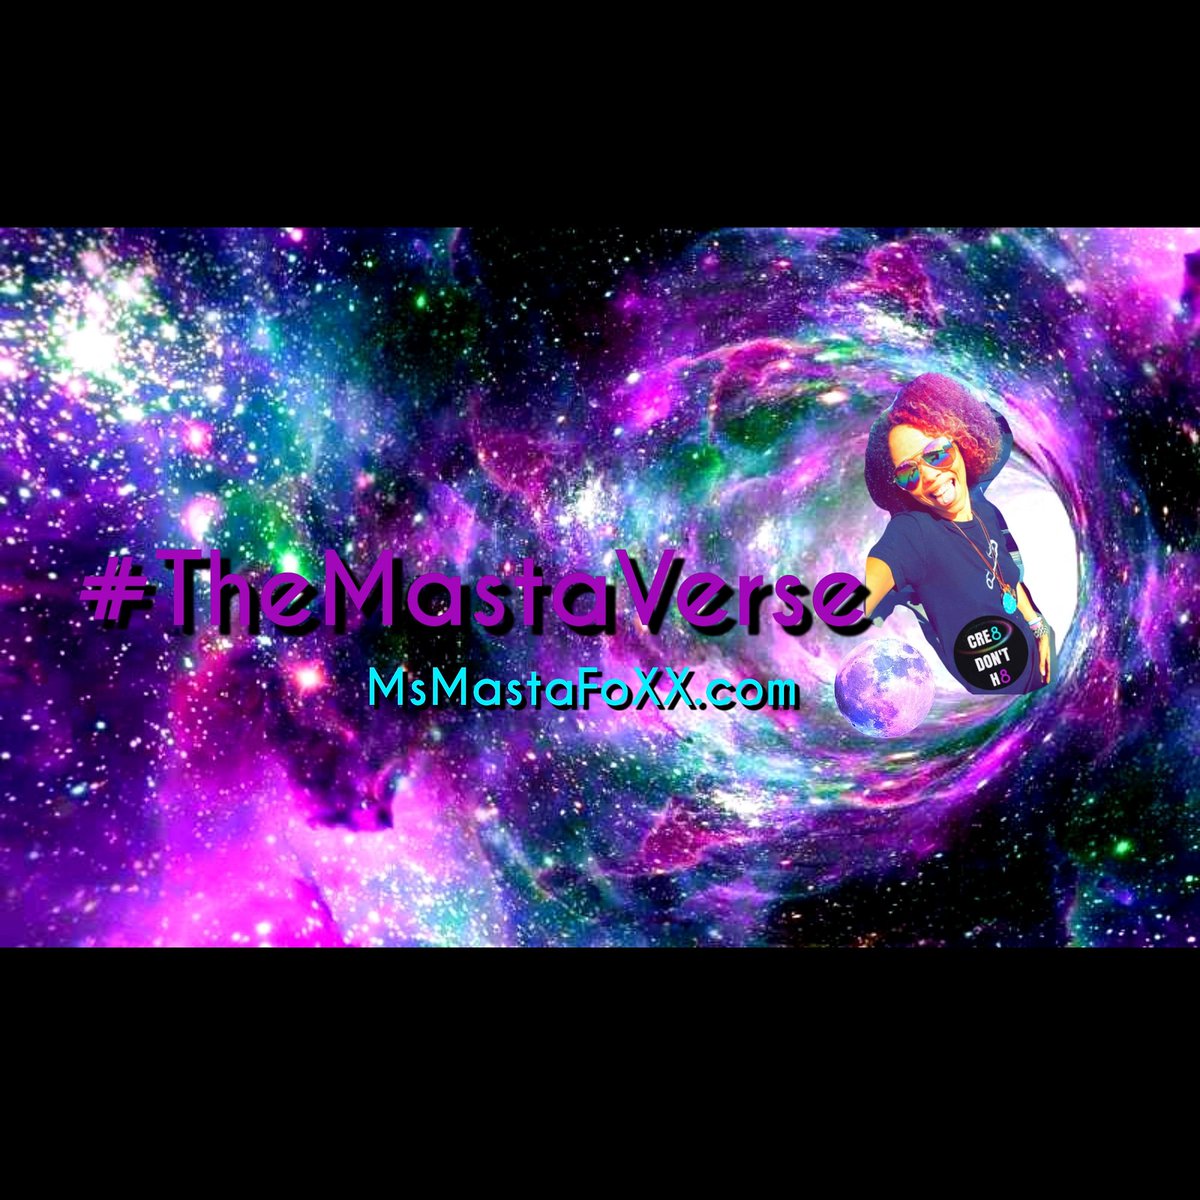 Welcome To My New Page @TheMastaVerse #TheMastaVerse 🌌🦊☯️💜🕉👑👽🖖
Everything @MsMastaFoXX @MsCosmicQueen @TeamMsMastaFoXX
Creator|Broadcaster|Influencer|Artist|Producer|Energy Reader|Chakra Balancer & More!
MsMastaFoXX.com
#MastaVerse #MsMastaFoxx #TeamMsMastaFoXX